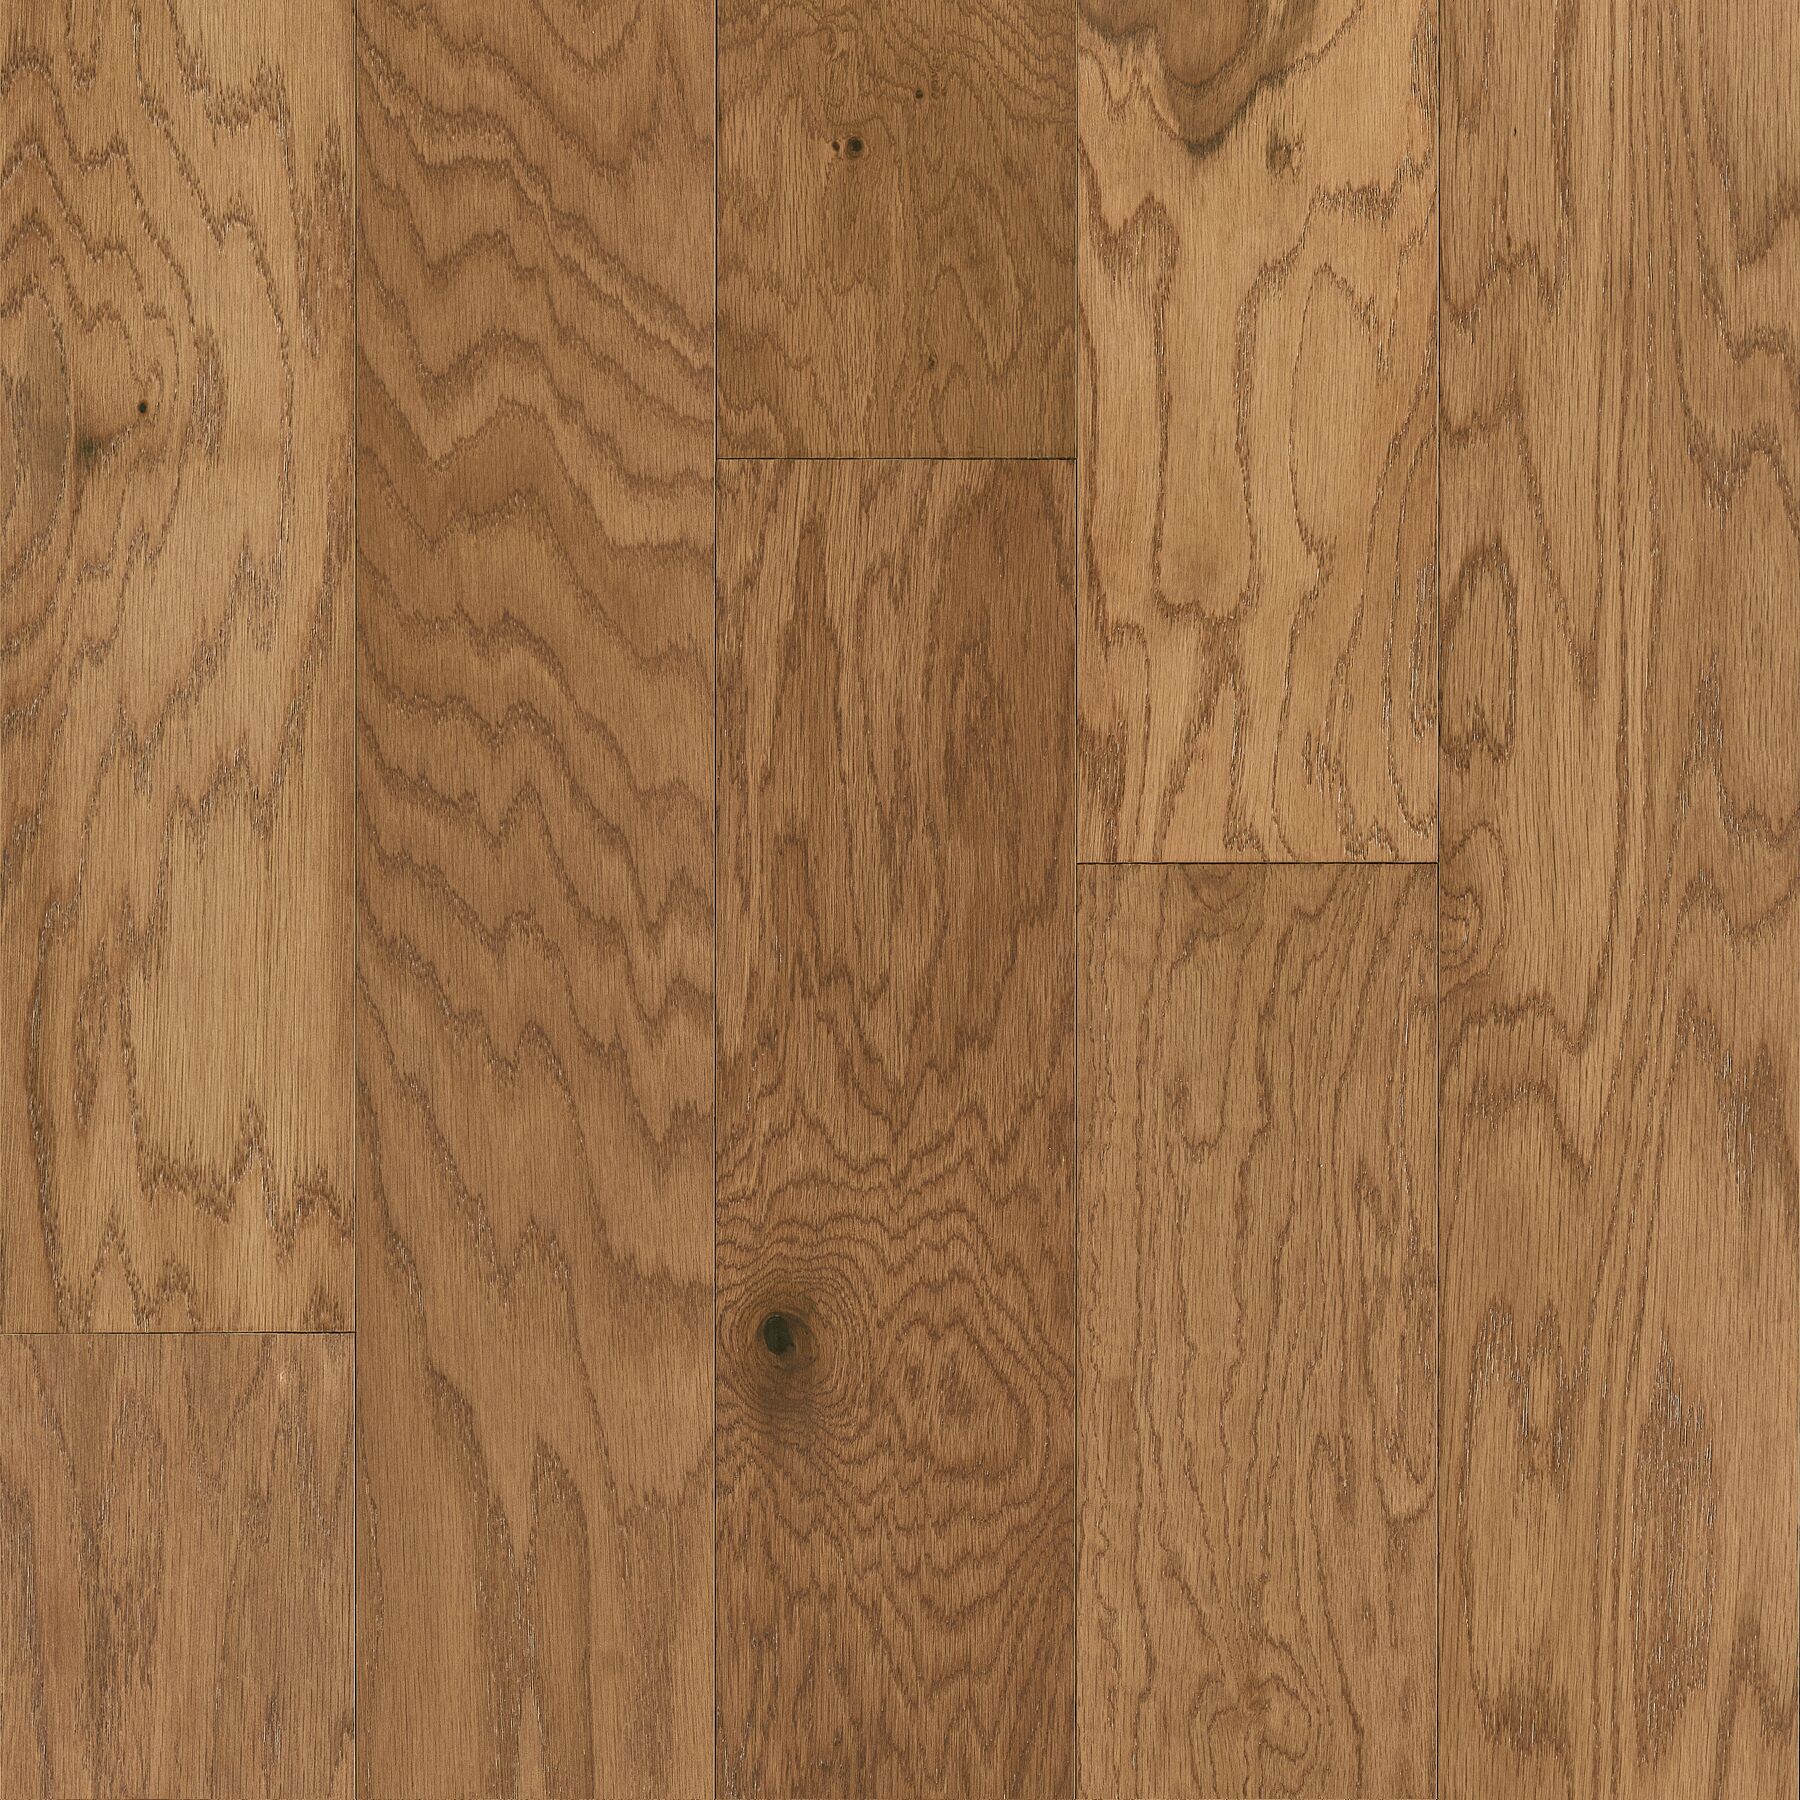 Callie Dogwood Densified Wood Flooring with hardened wood